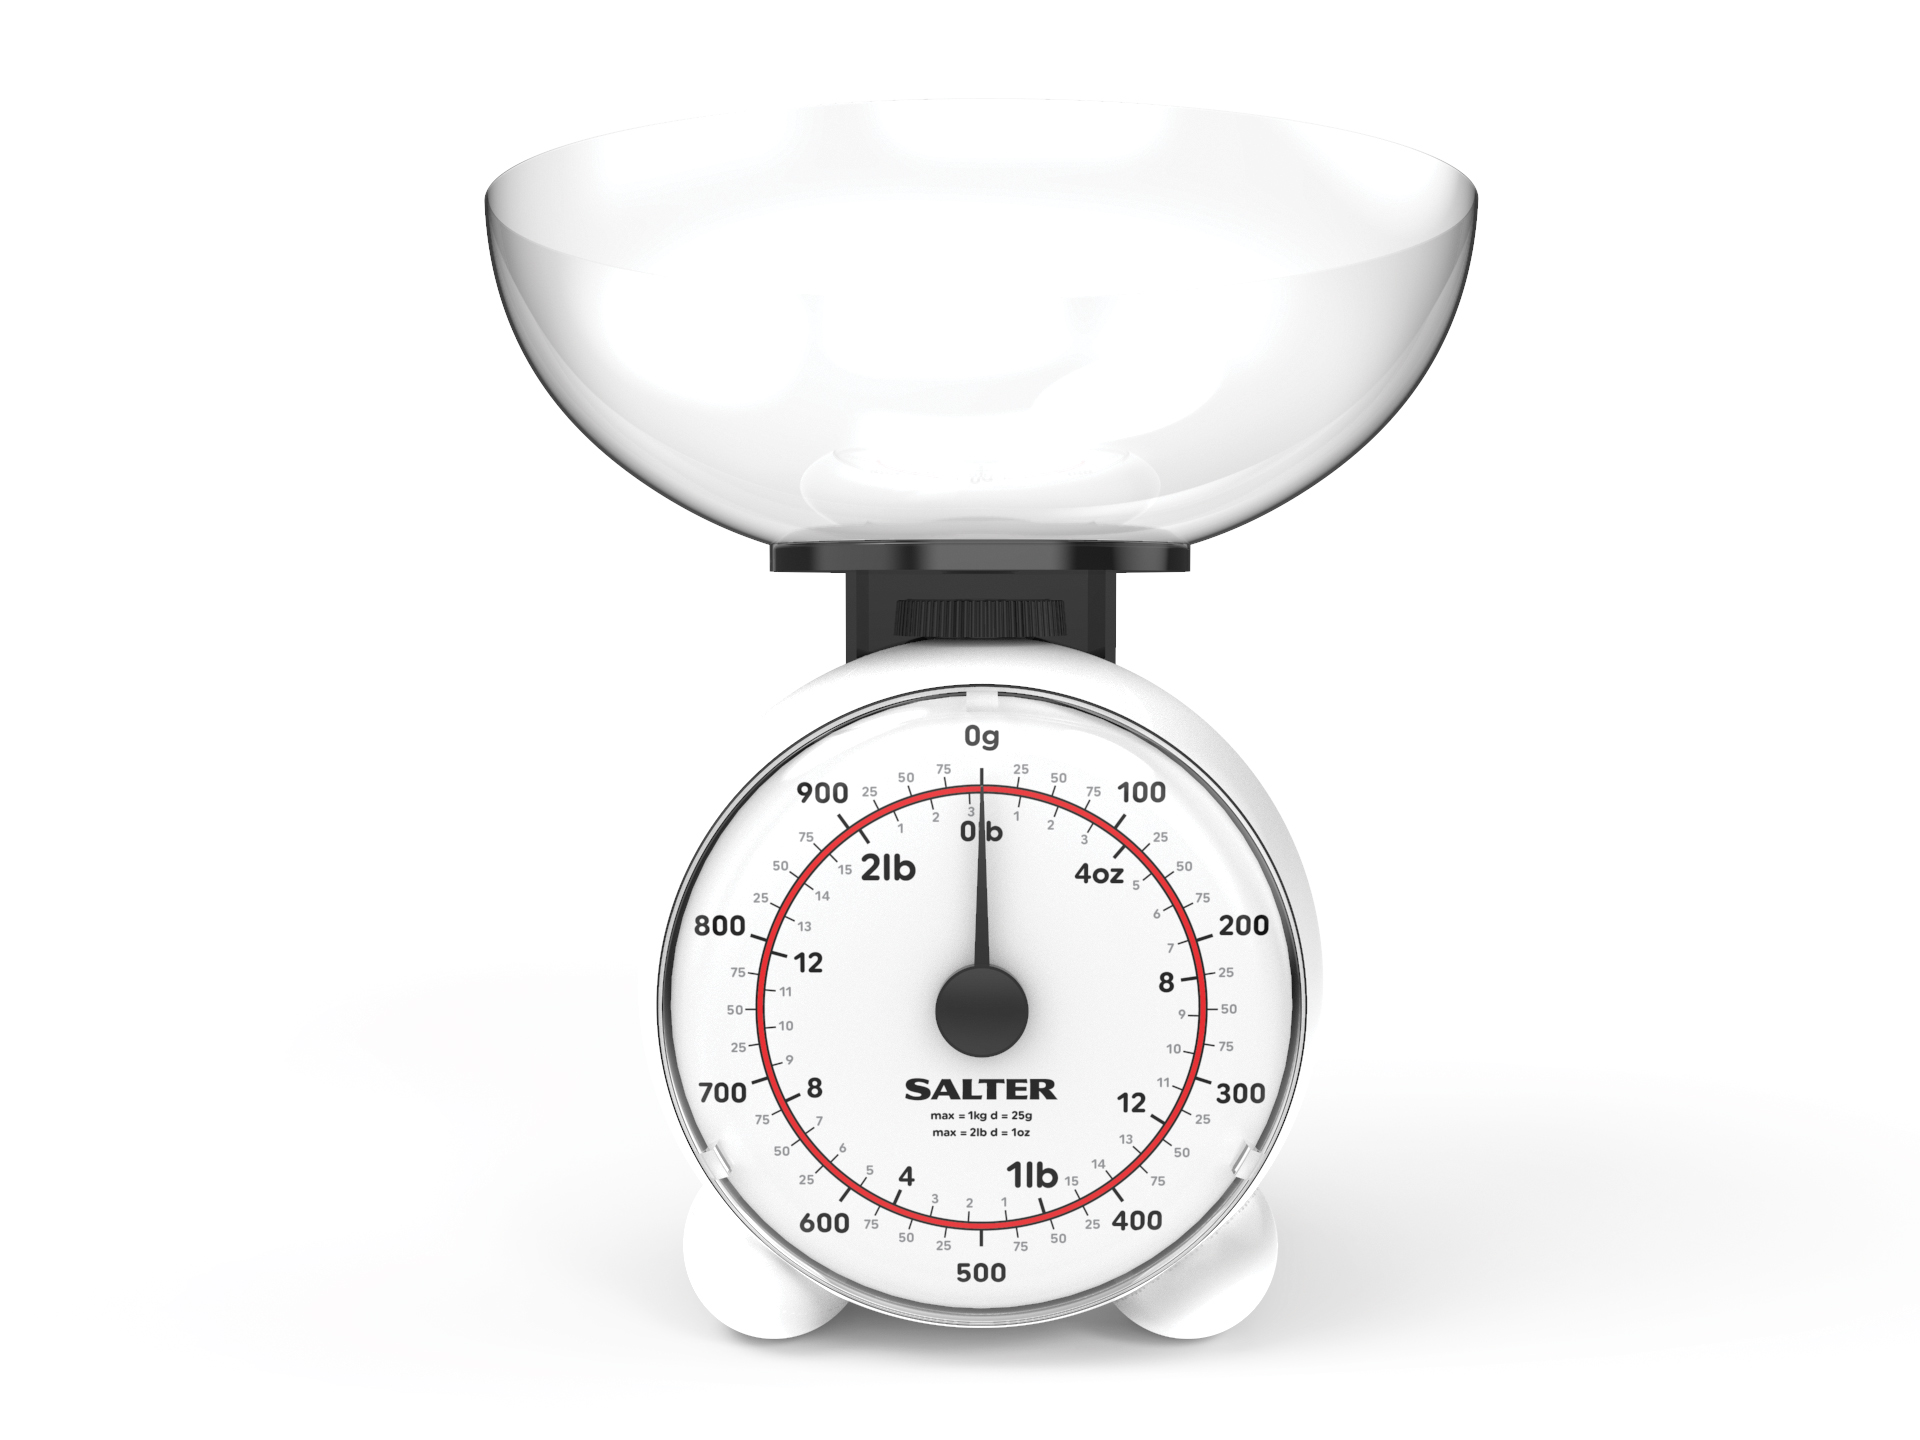 Hana Mechanical Weighing Scale